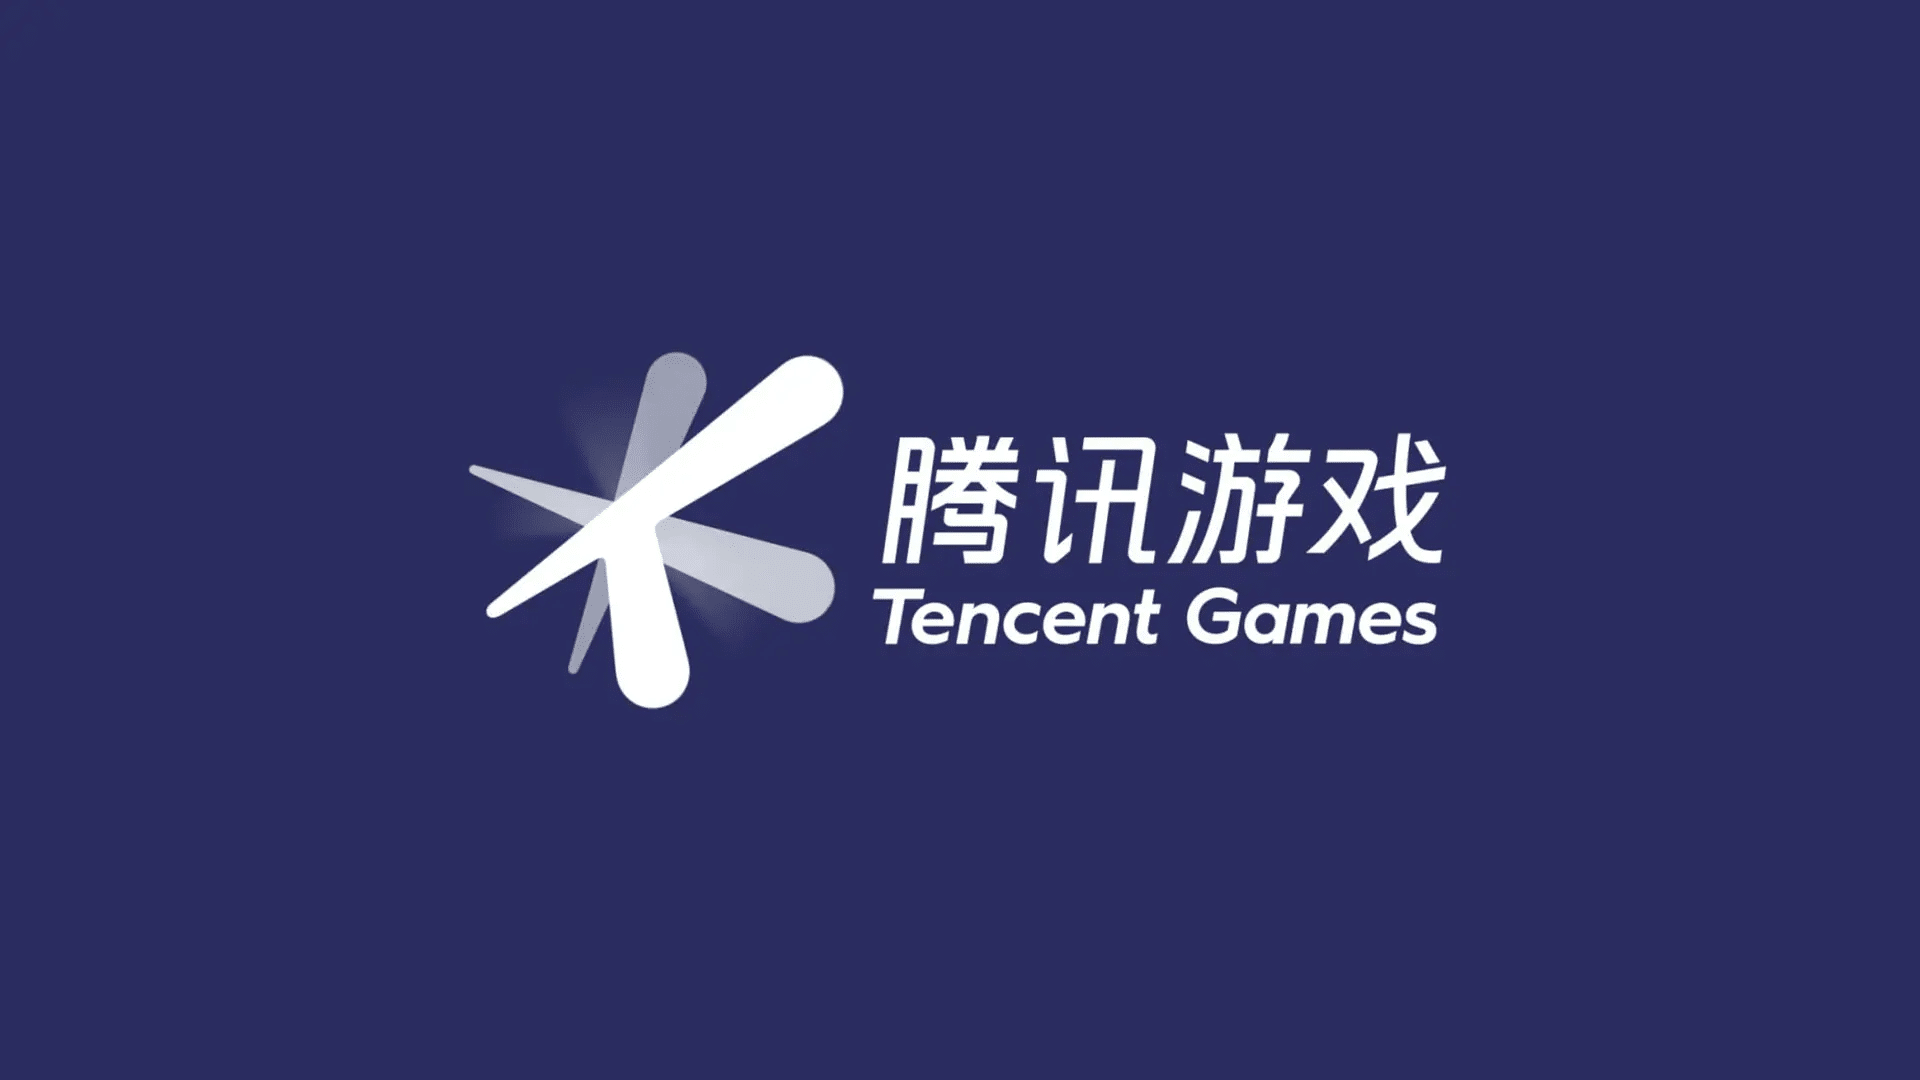 tencent games showcase